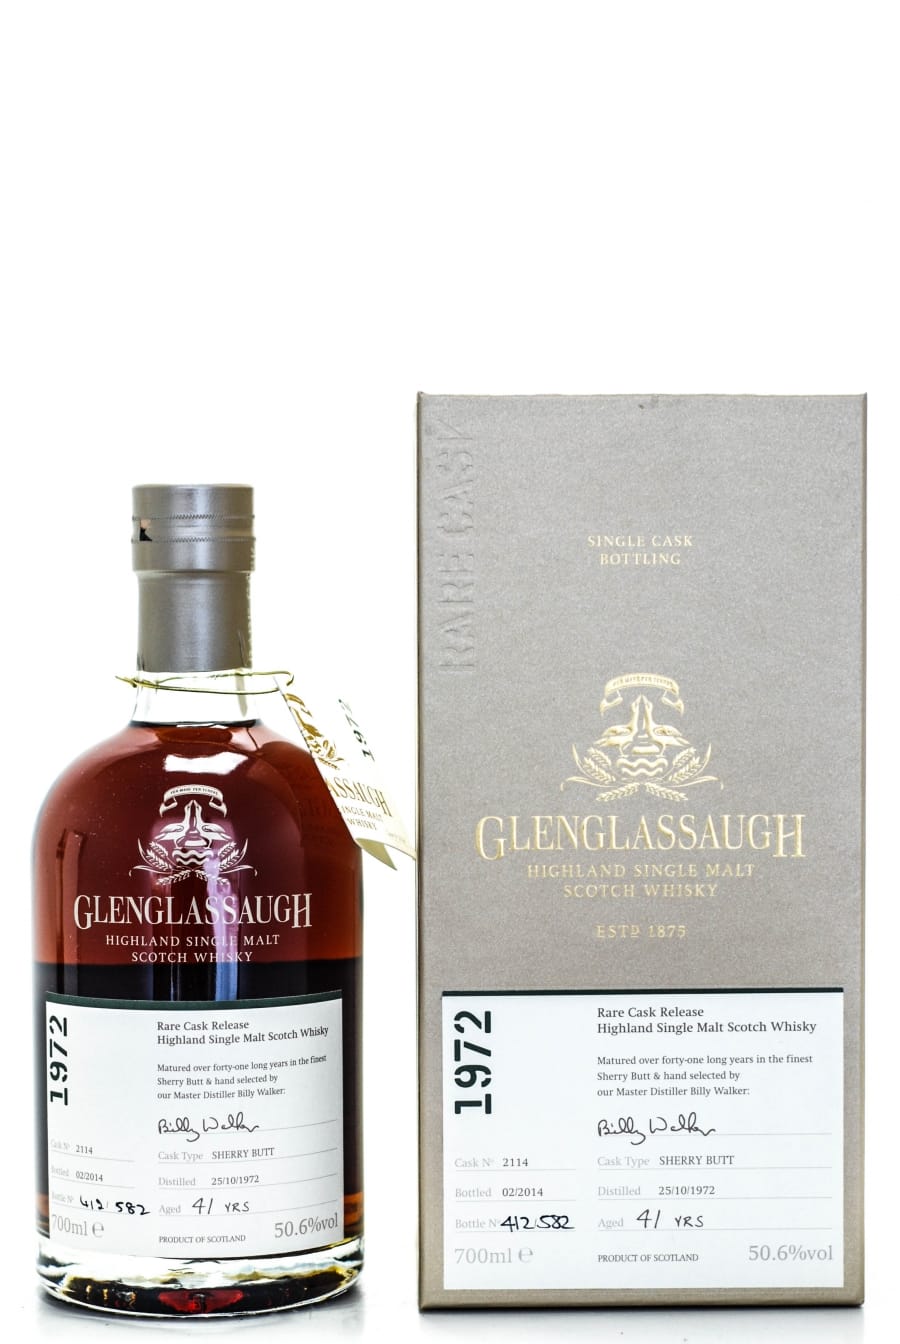 Glenglassaugh - Glenglassaugh 41 yo Rare Cask Release Batch 1 cask 2114 Refill Sherry Butt (50.6%, OB, Distilled: 25.10.1972 bottled 02.2014) 1 of 582 bottles 1972 Perfect